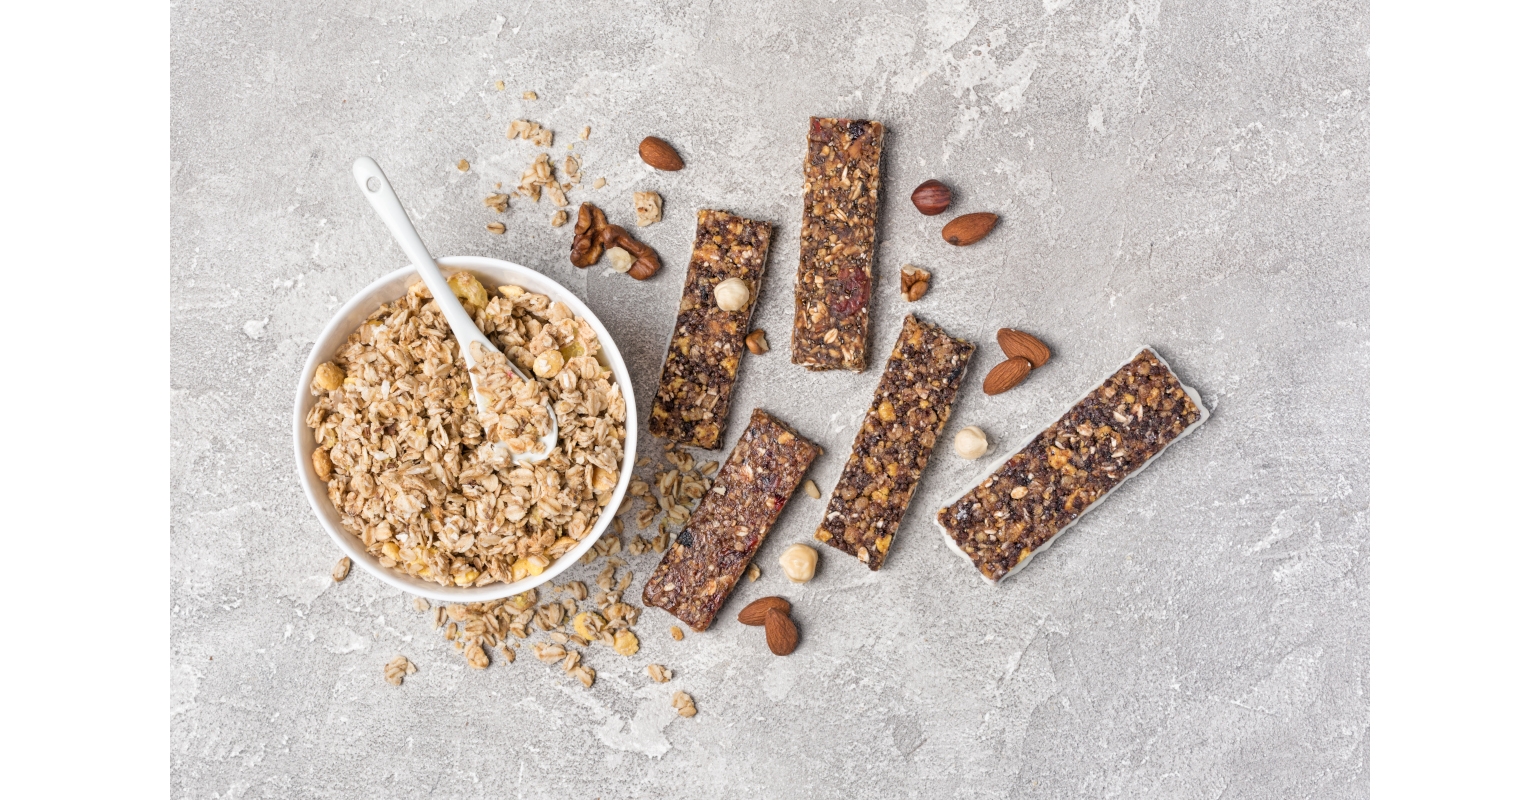 FDA Recall: Quaker Granola Bars, Cereals Could Be Contaminated with  Salmonella